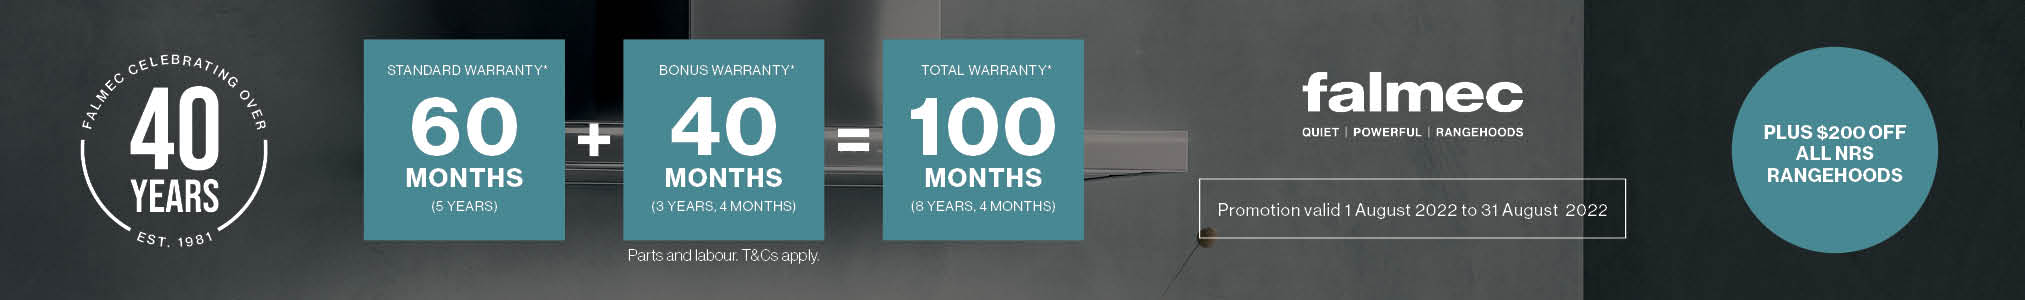 Bonus 40 month warranty on all Falmec rangehoods plus $200 off all NRS rangehoods